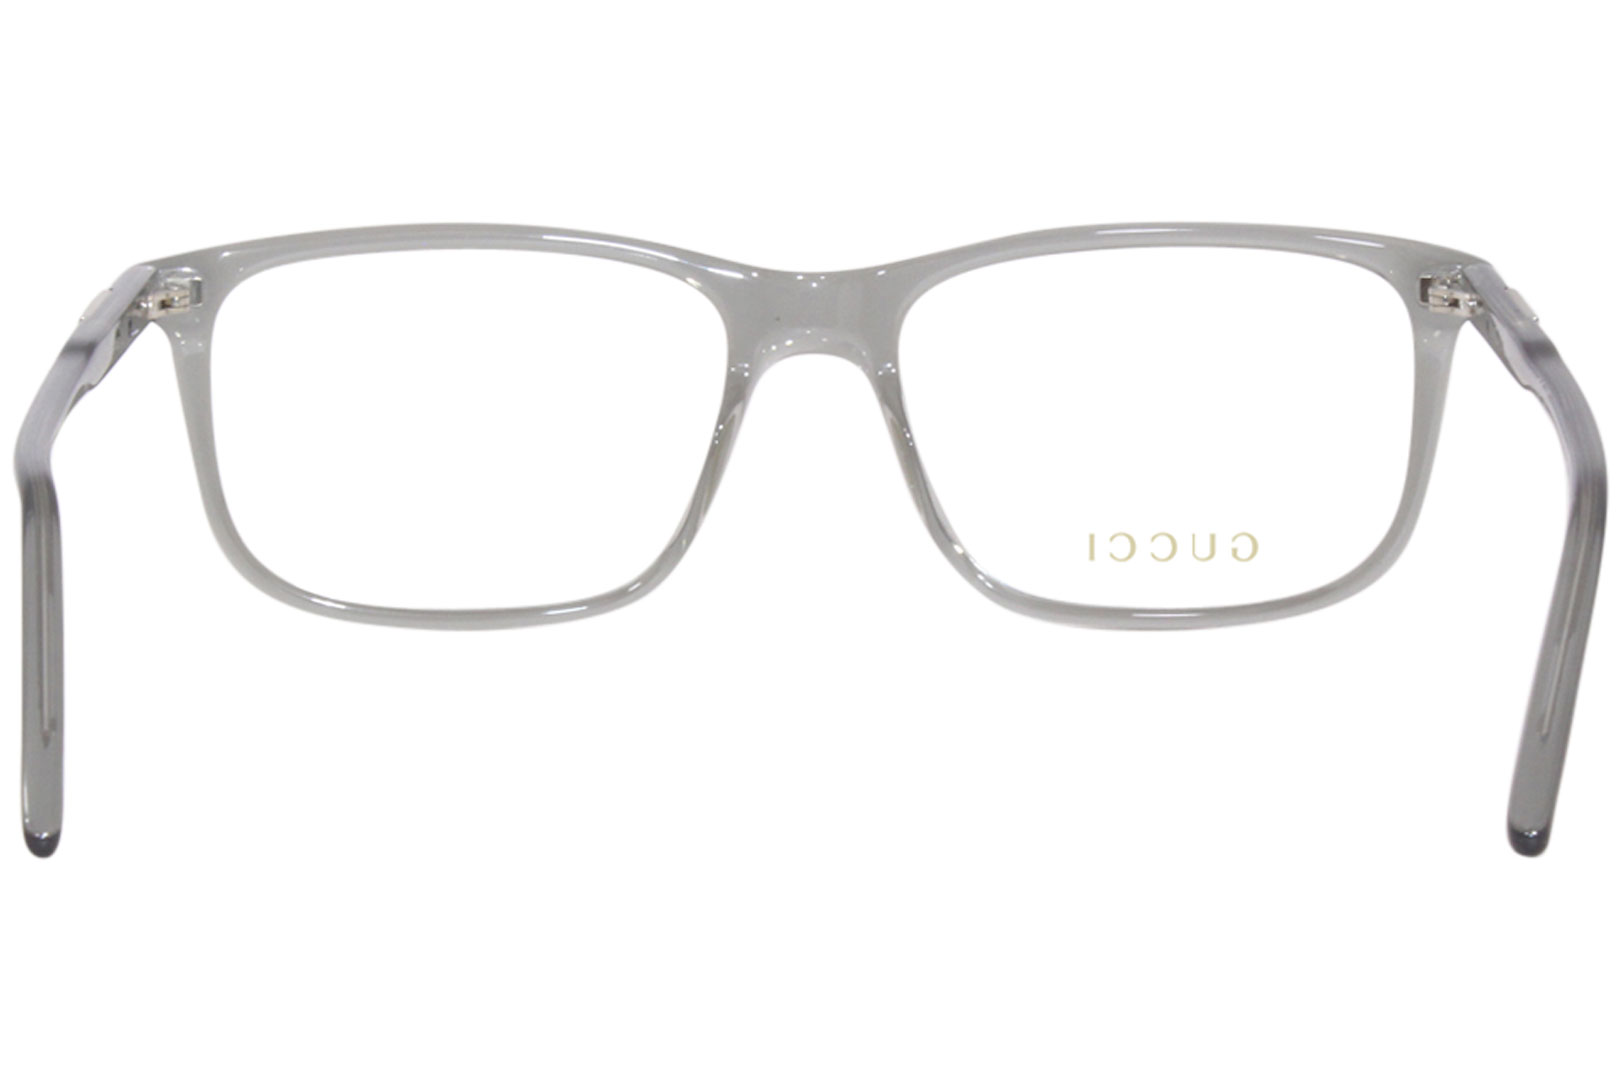 Gucci GG1159O 002 Eyeglasses Men's Grey Full Rim Rectangle Shape 56-17 ...